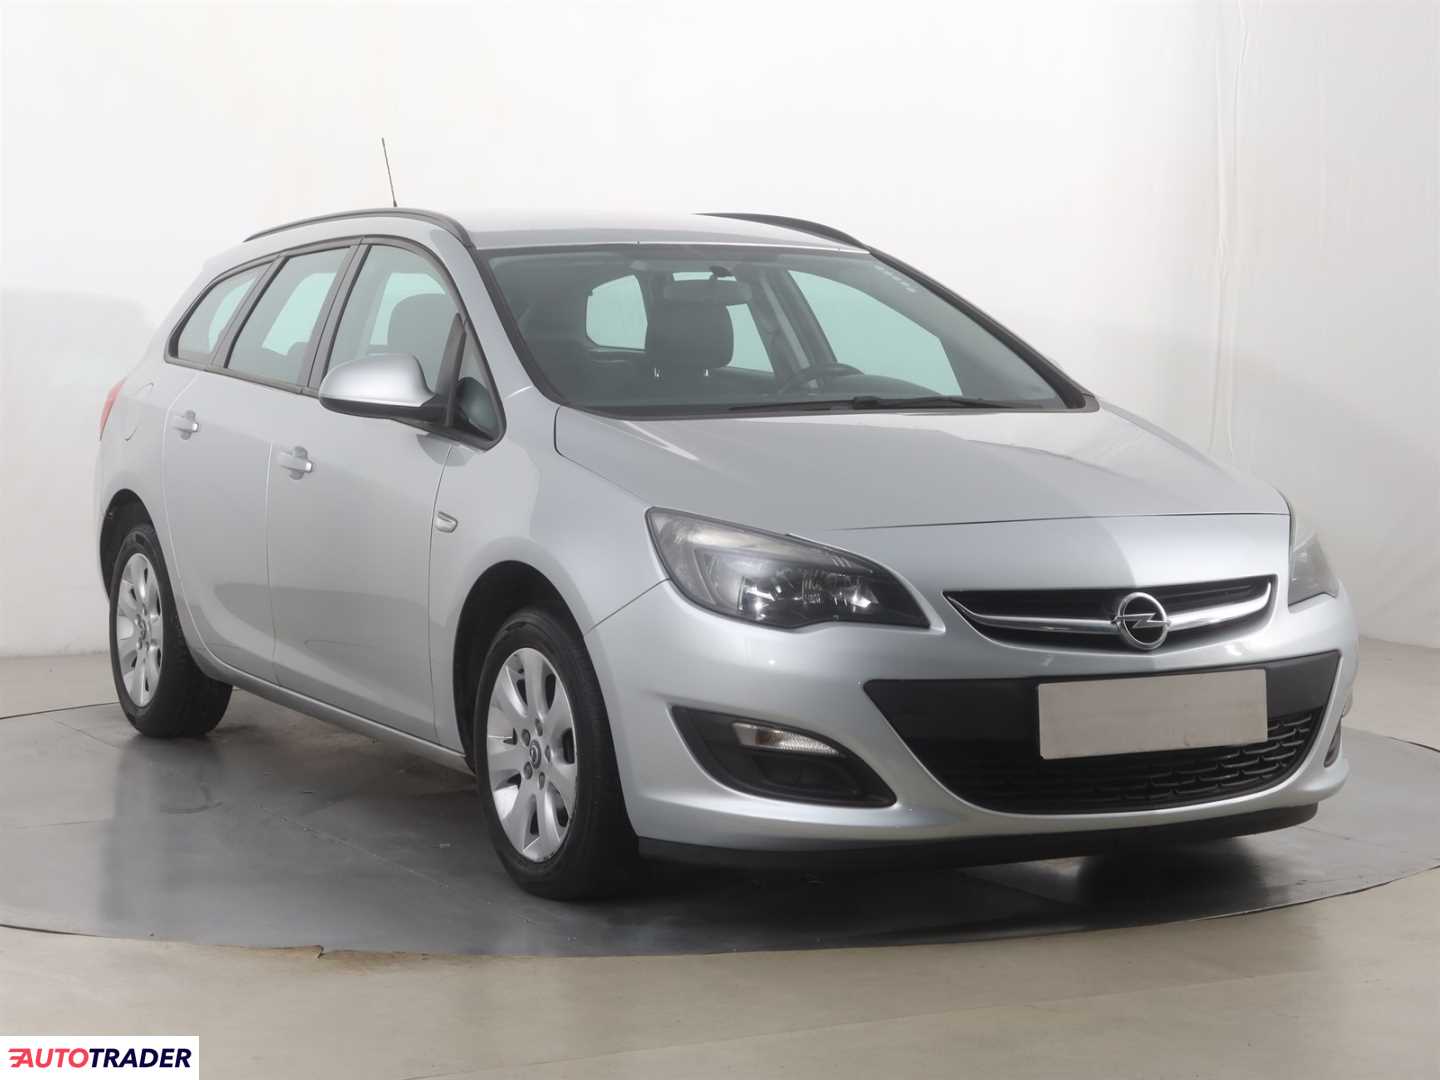 Opel Astra 2014 1.6 134 KM